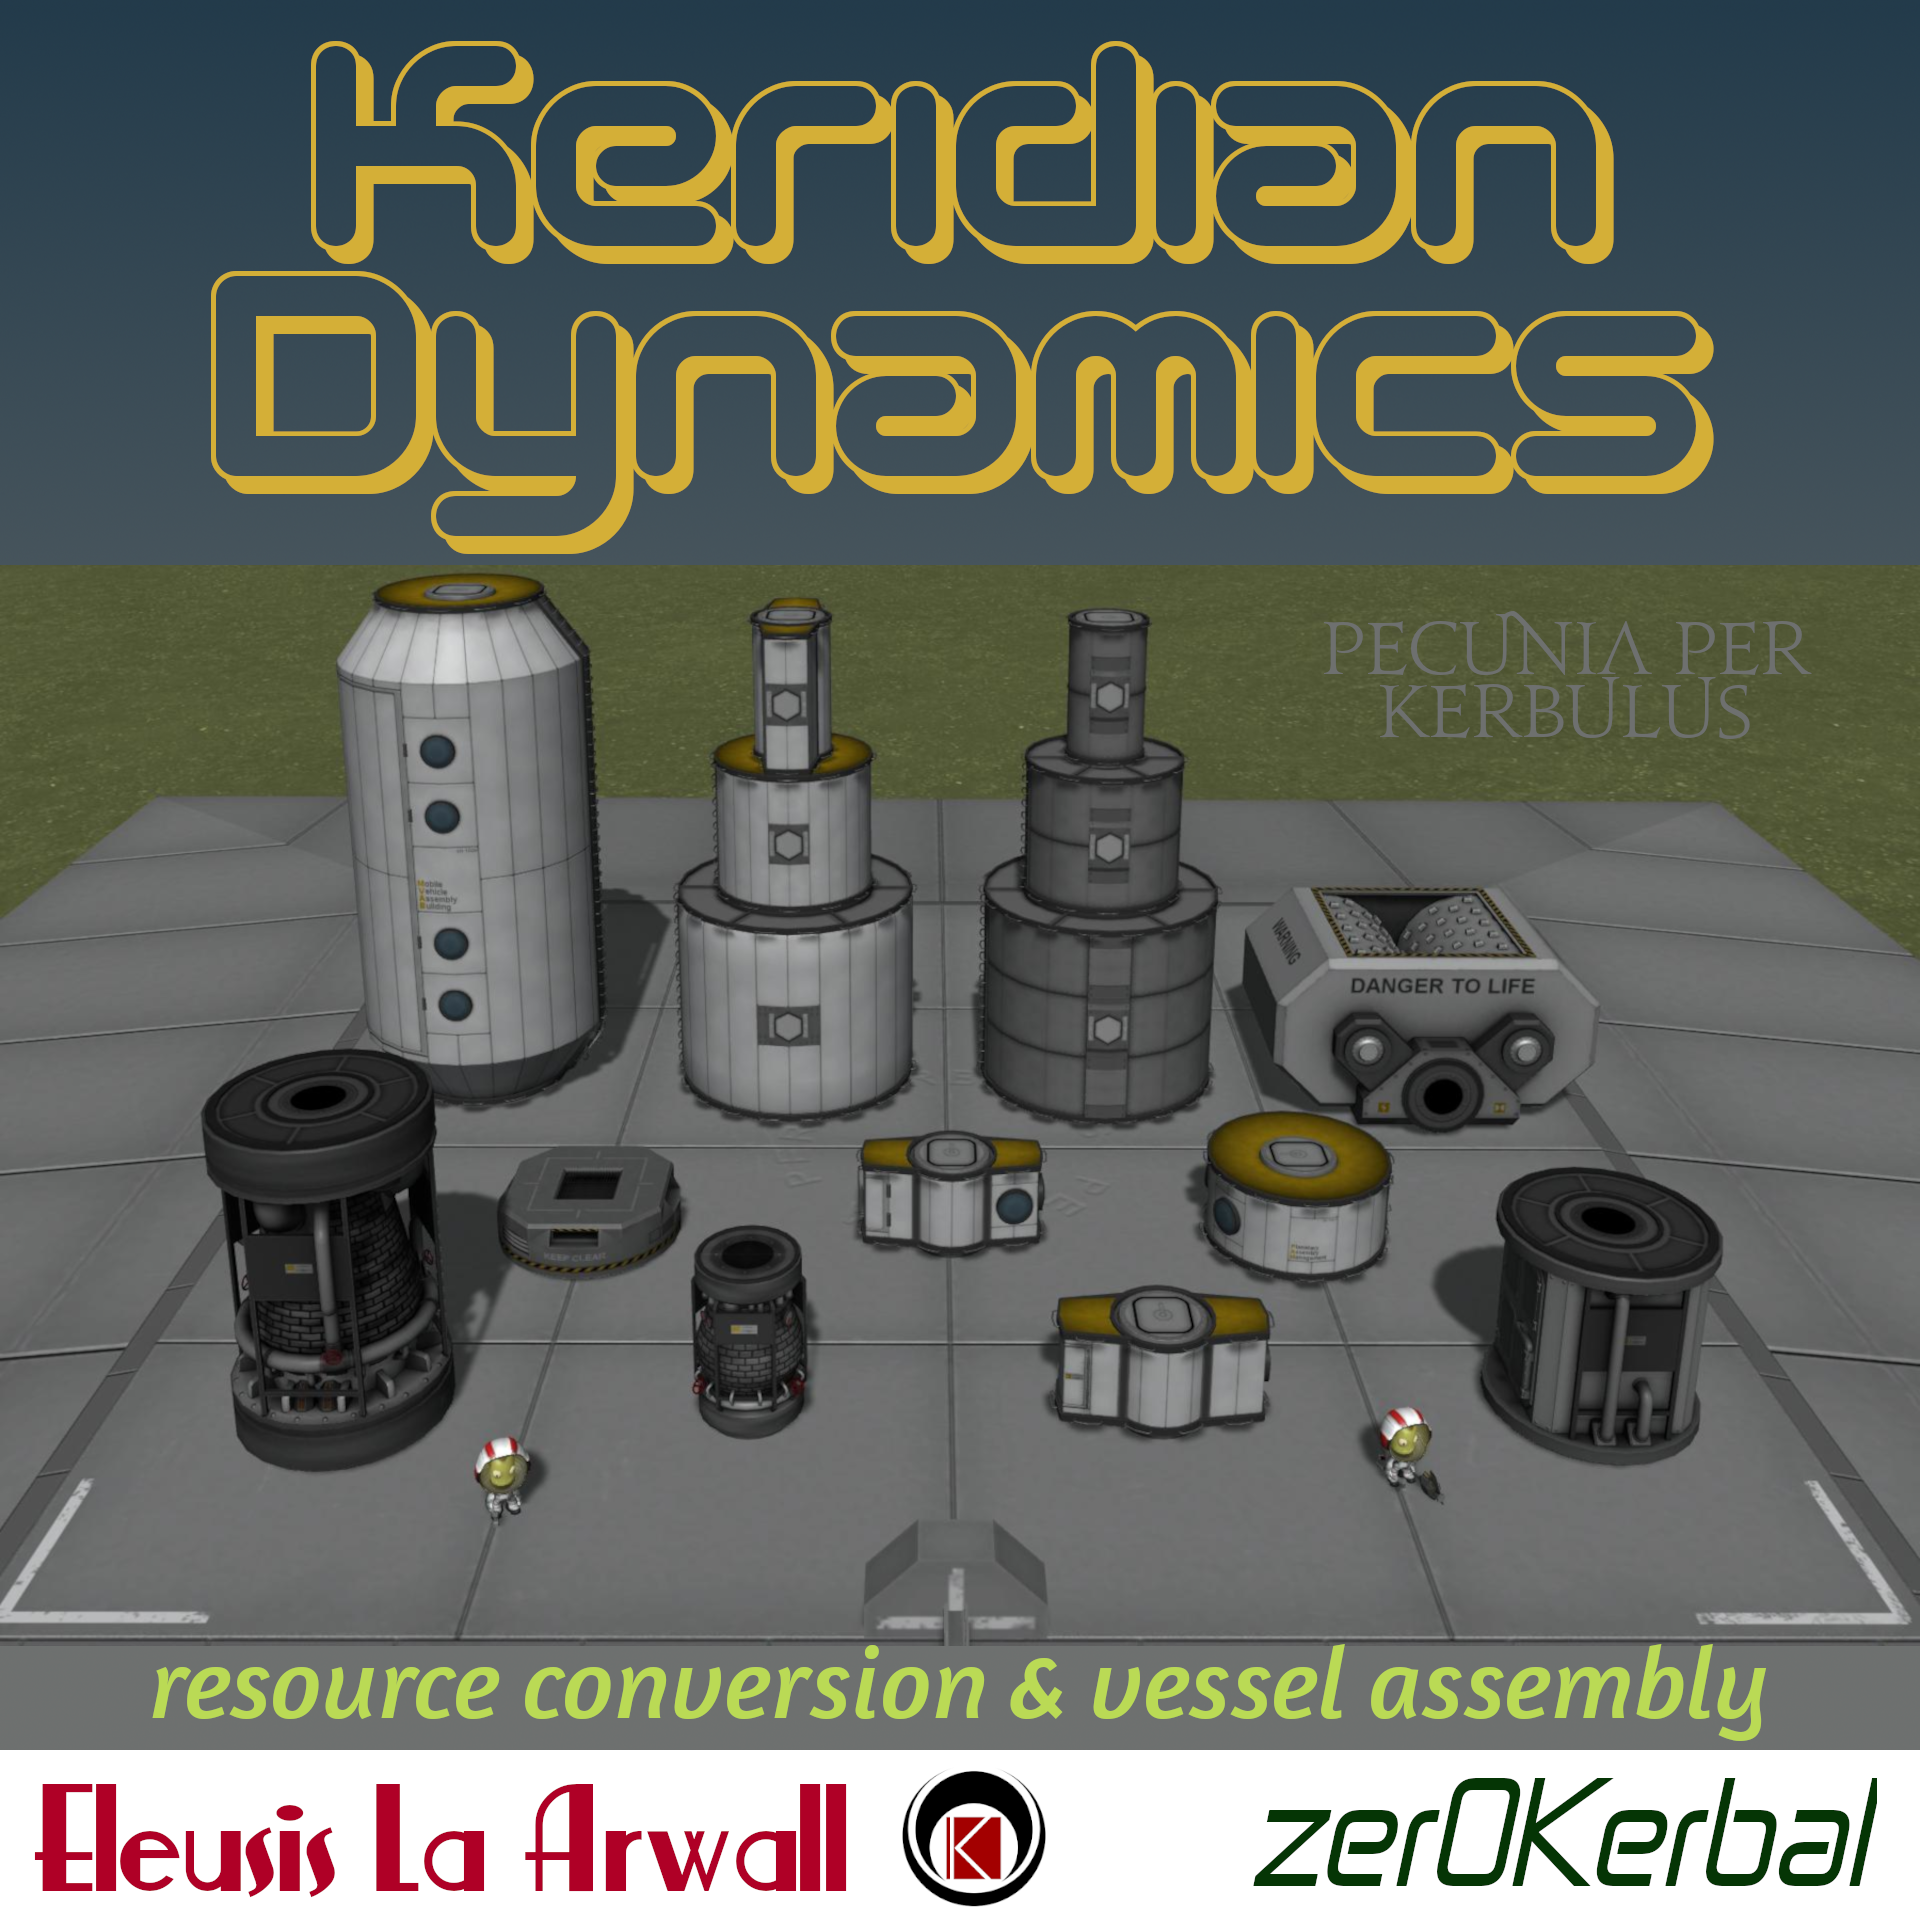 Keridian Dynamics (KDVA) by Eleusis La Arwall project avatar